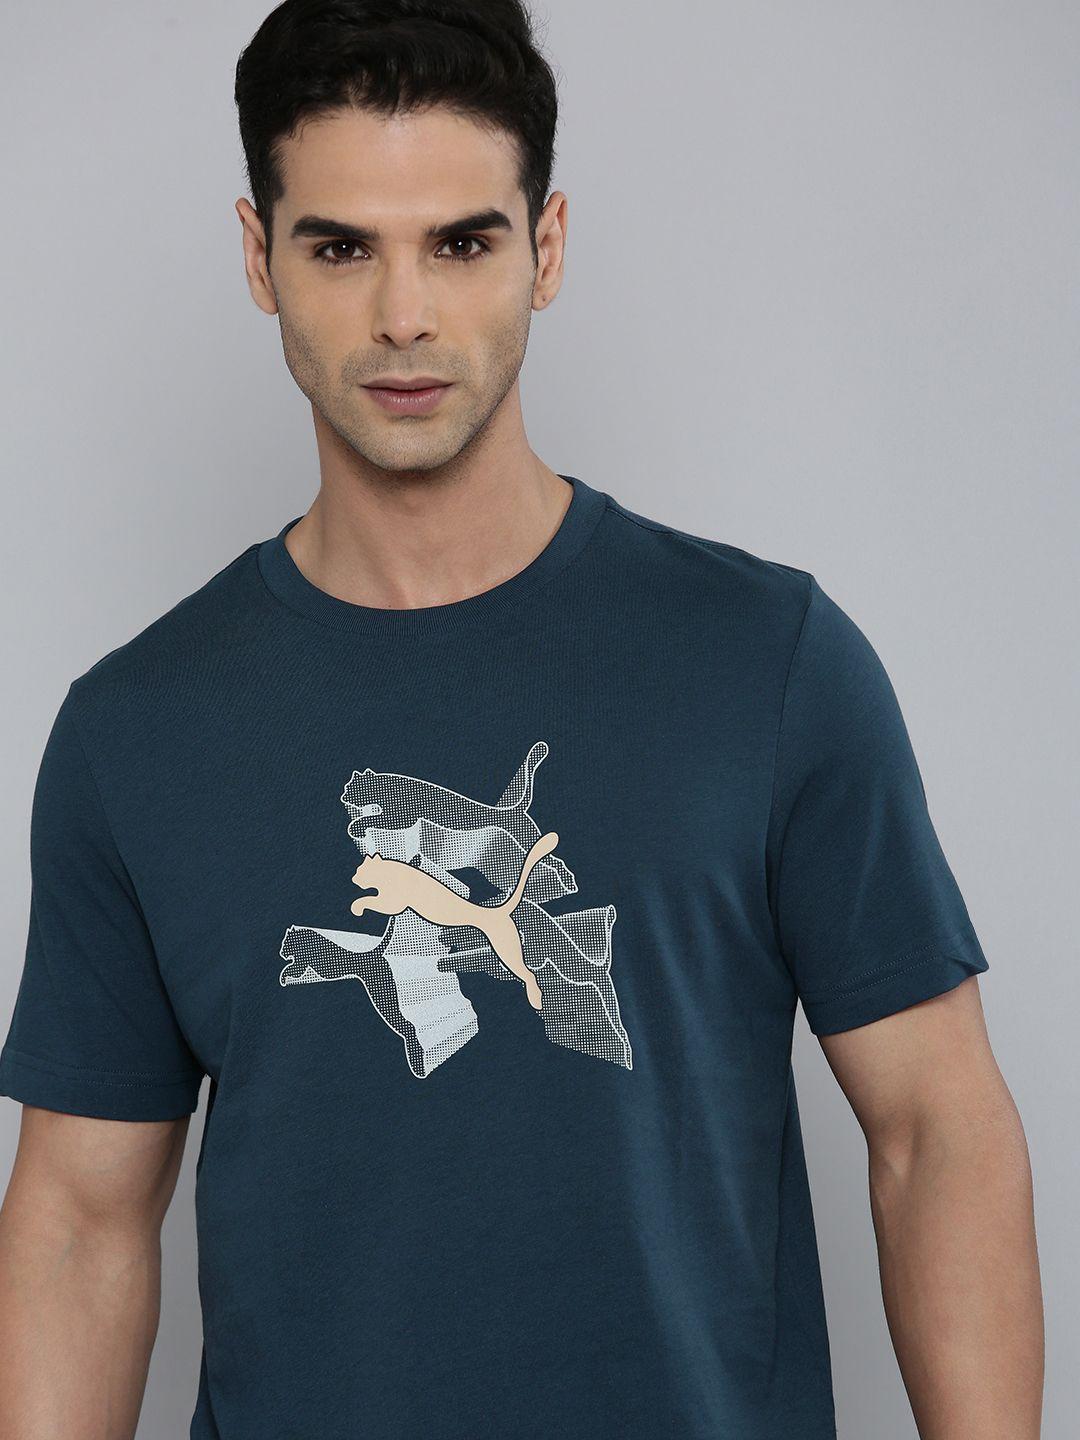 puma round neck graphics reflective printed pure cotton t-shirt